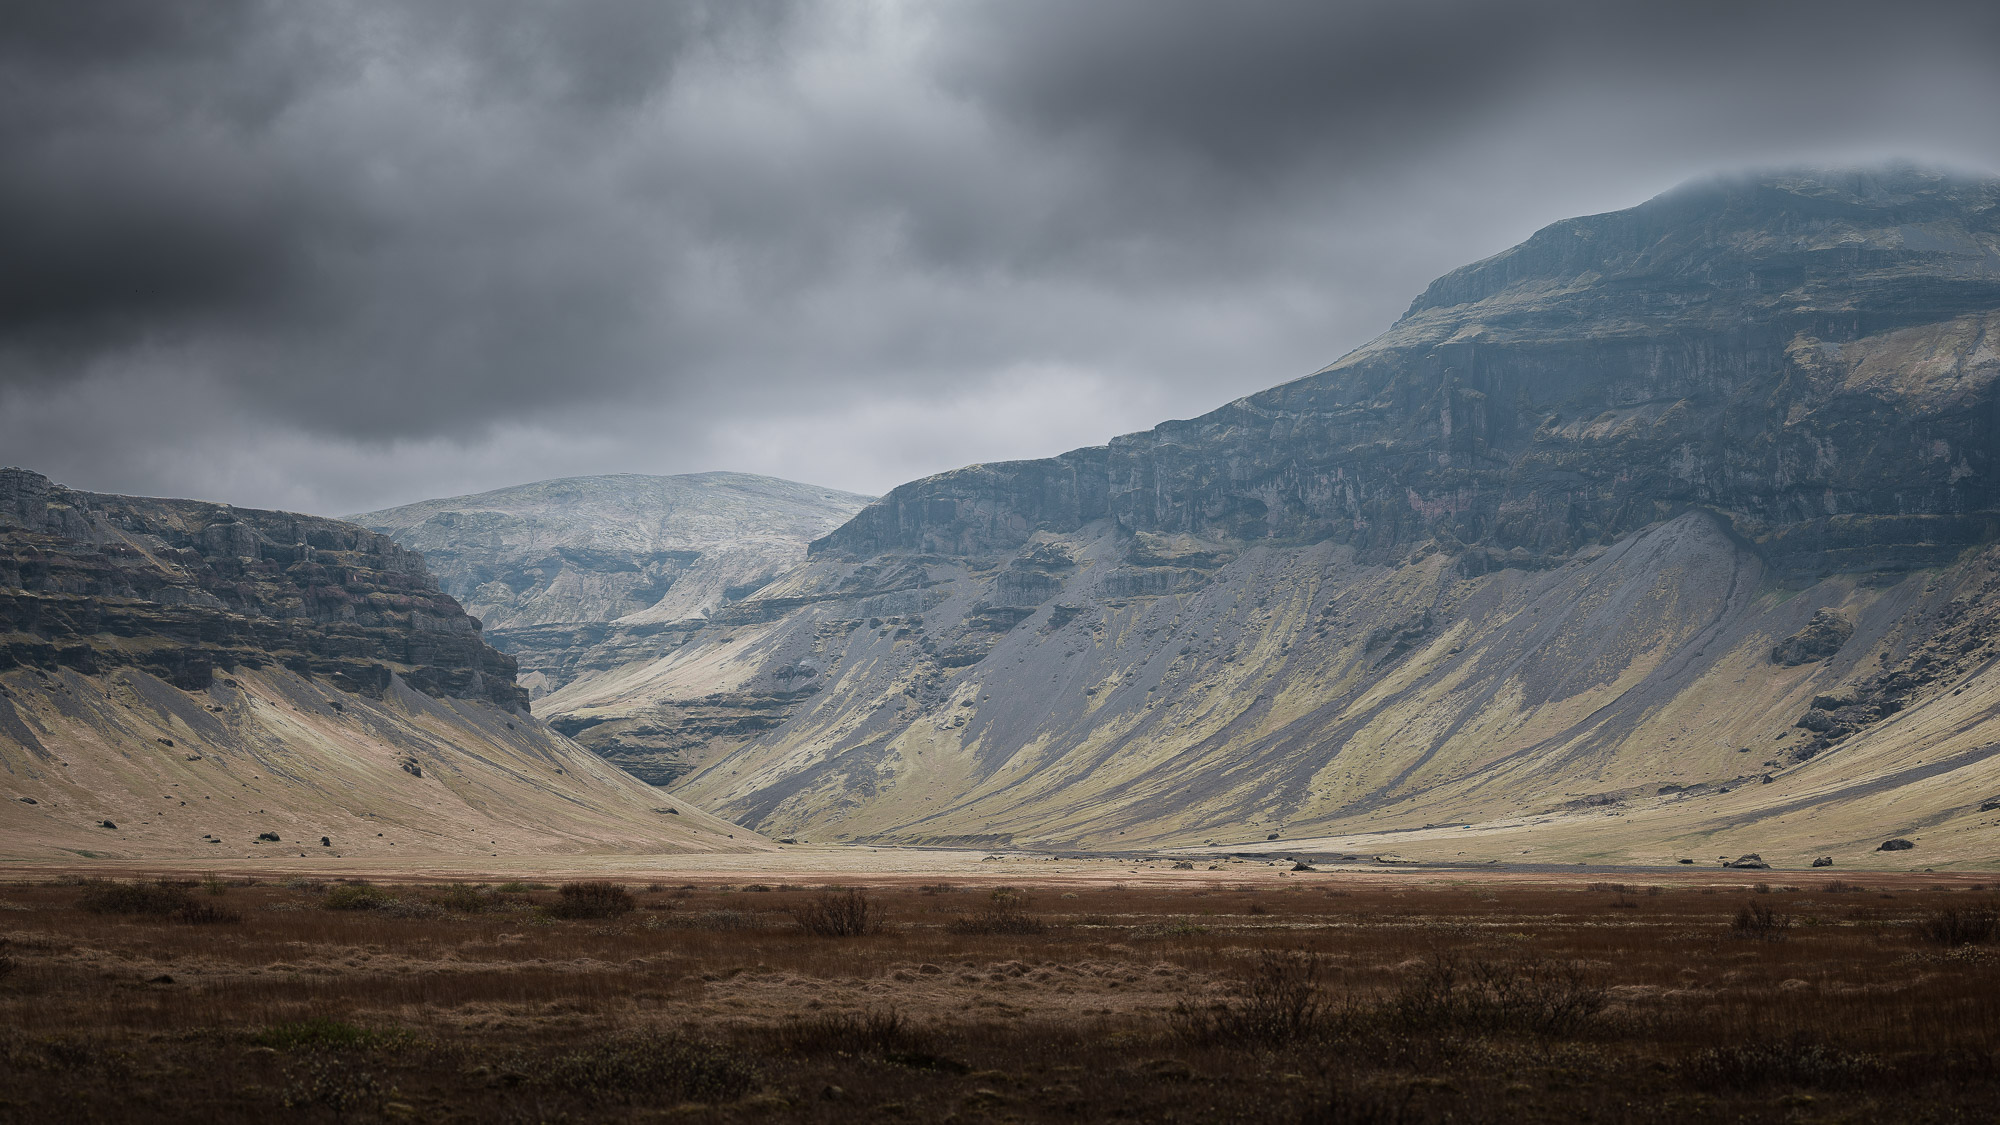 Along Þjóðvegur. 8 frame panorama, 50 megapixels, Sigma 105mm f/1.4 @ f/4, 1/400th, ISO 100